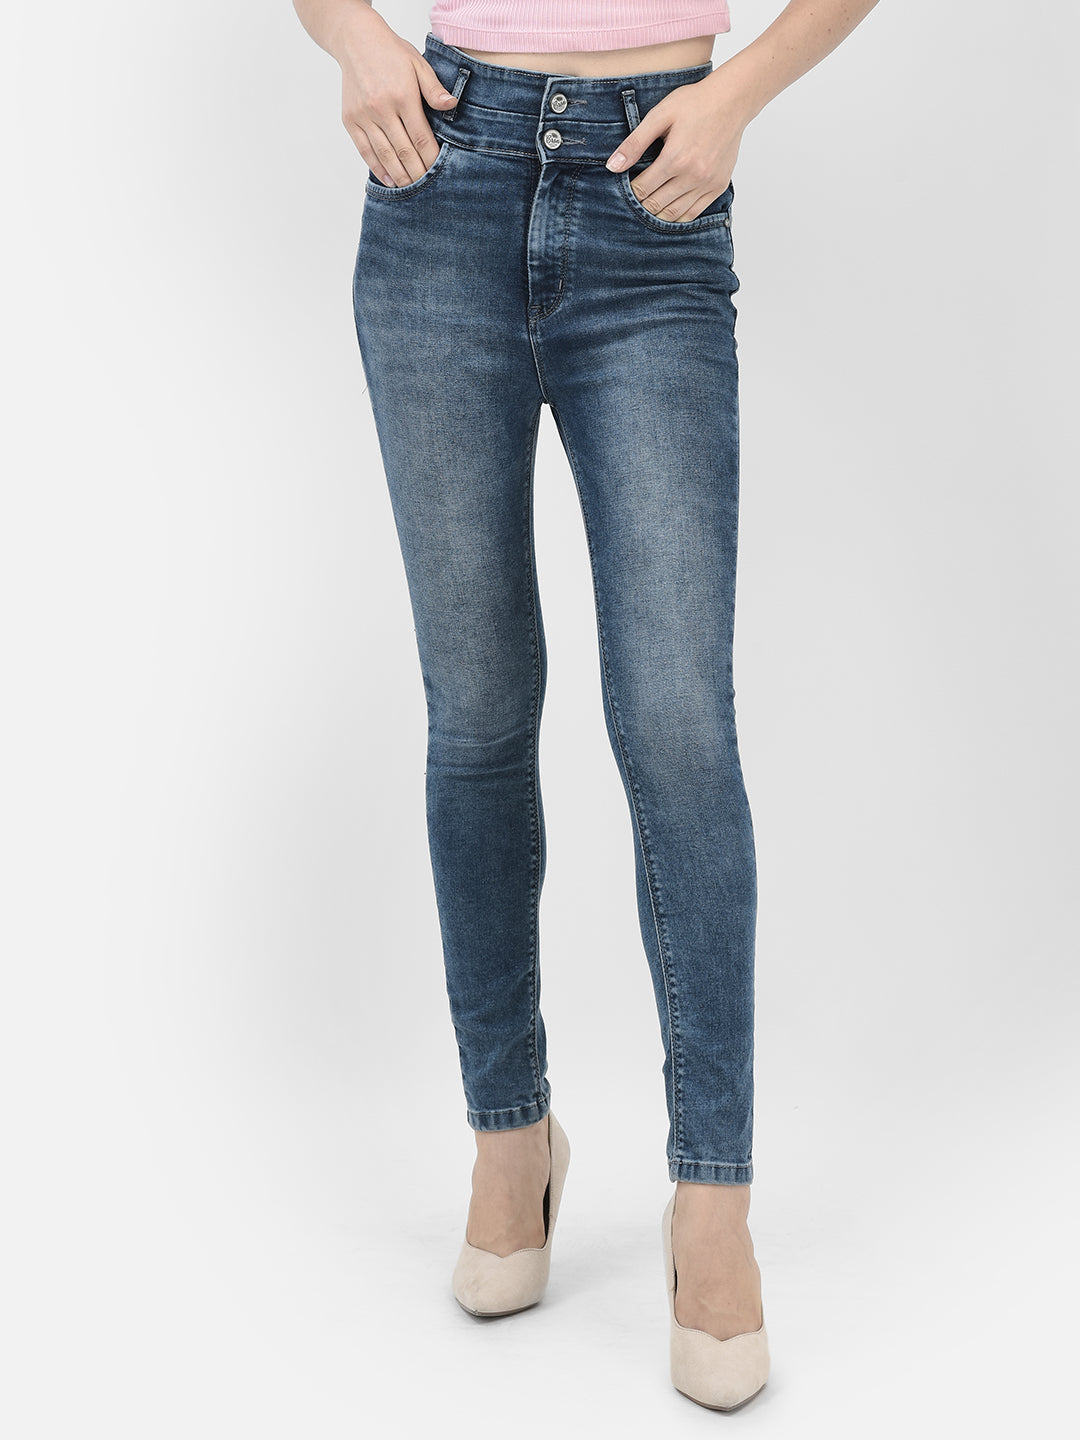 Blue High Waist Skinny Jeans-Women Jeans-Crimsoune Club